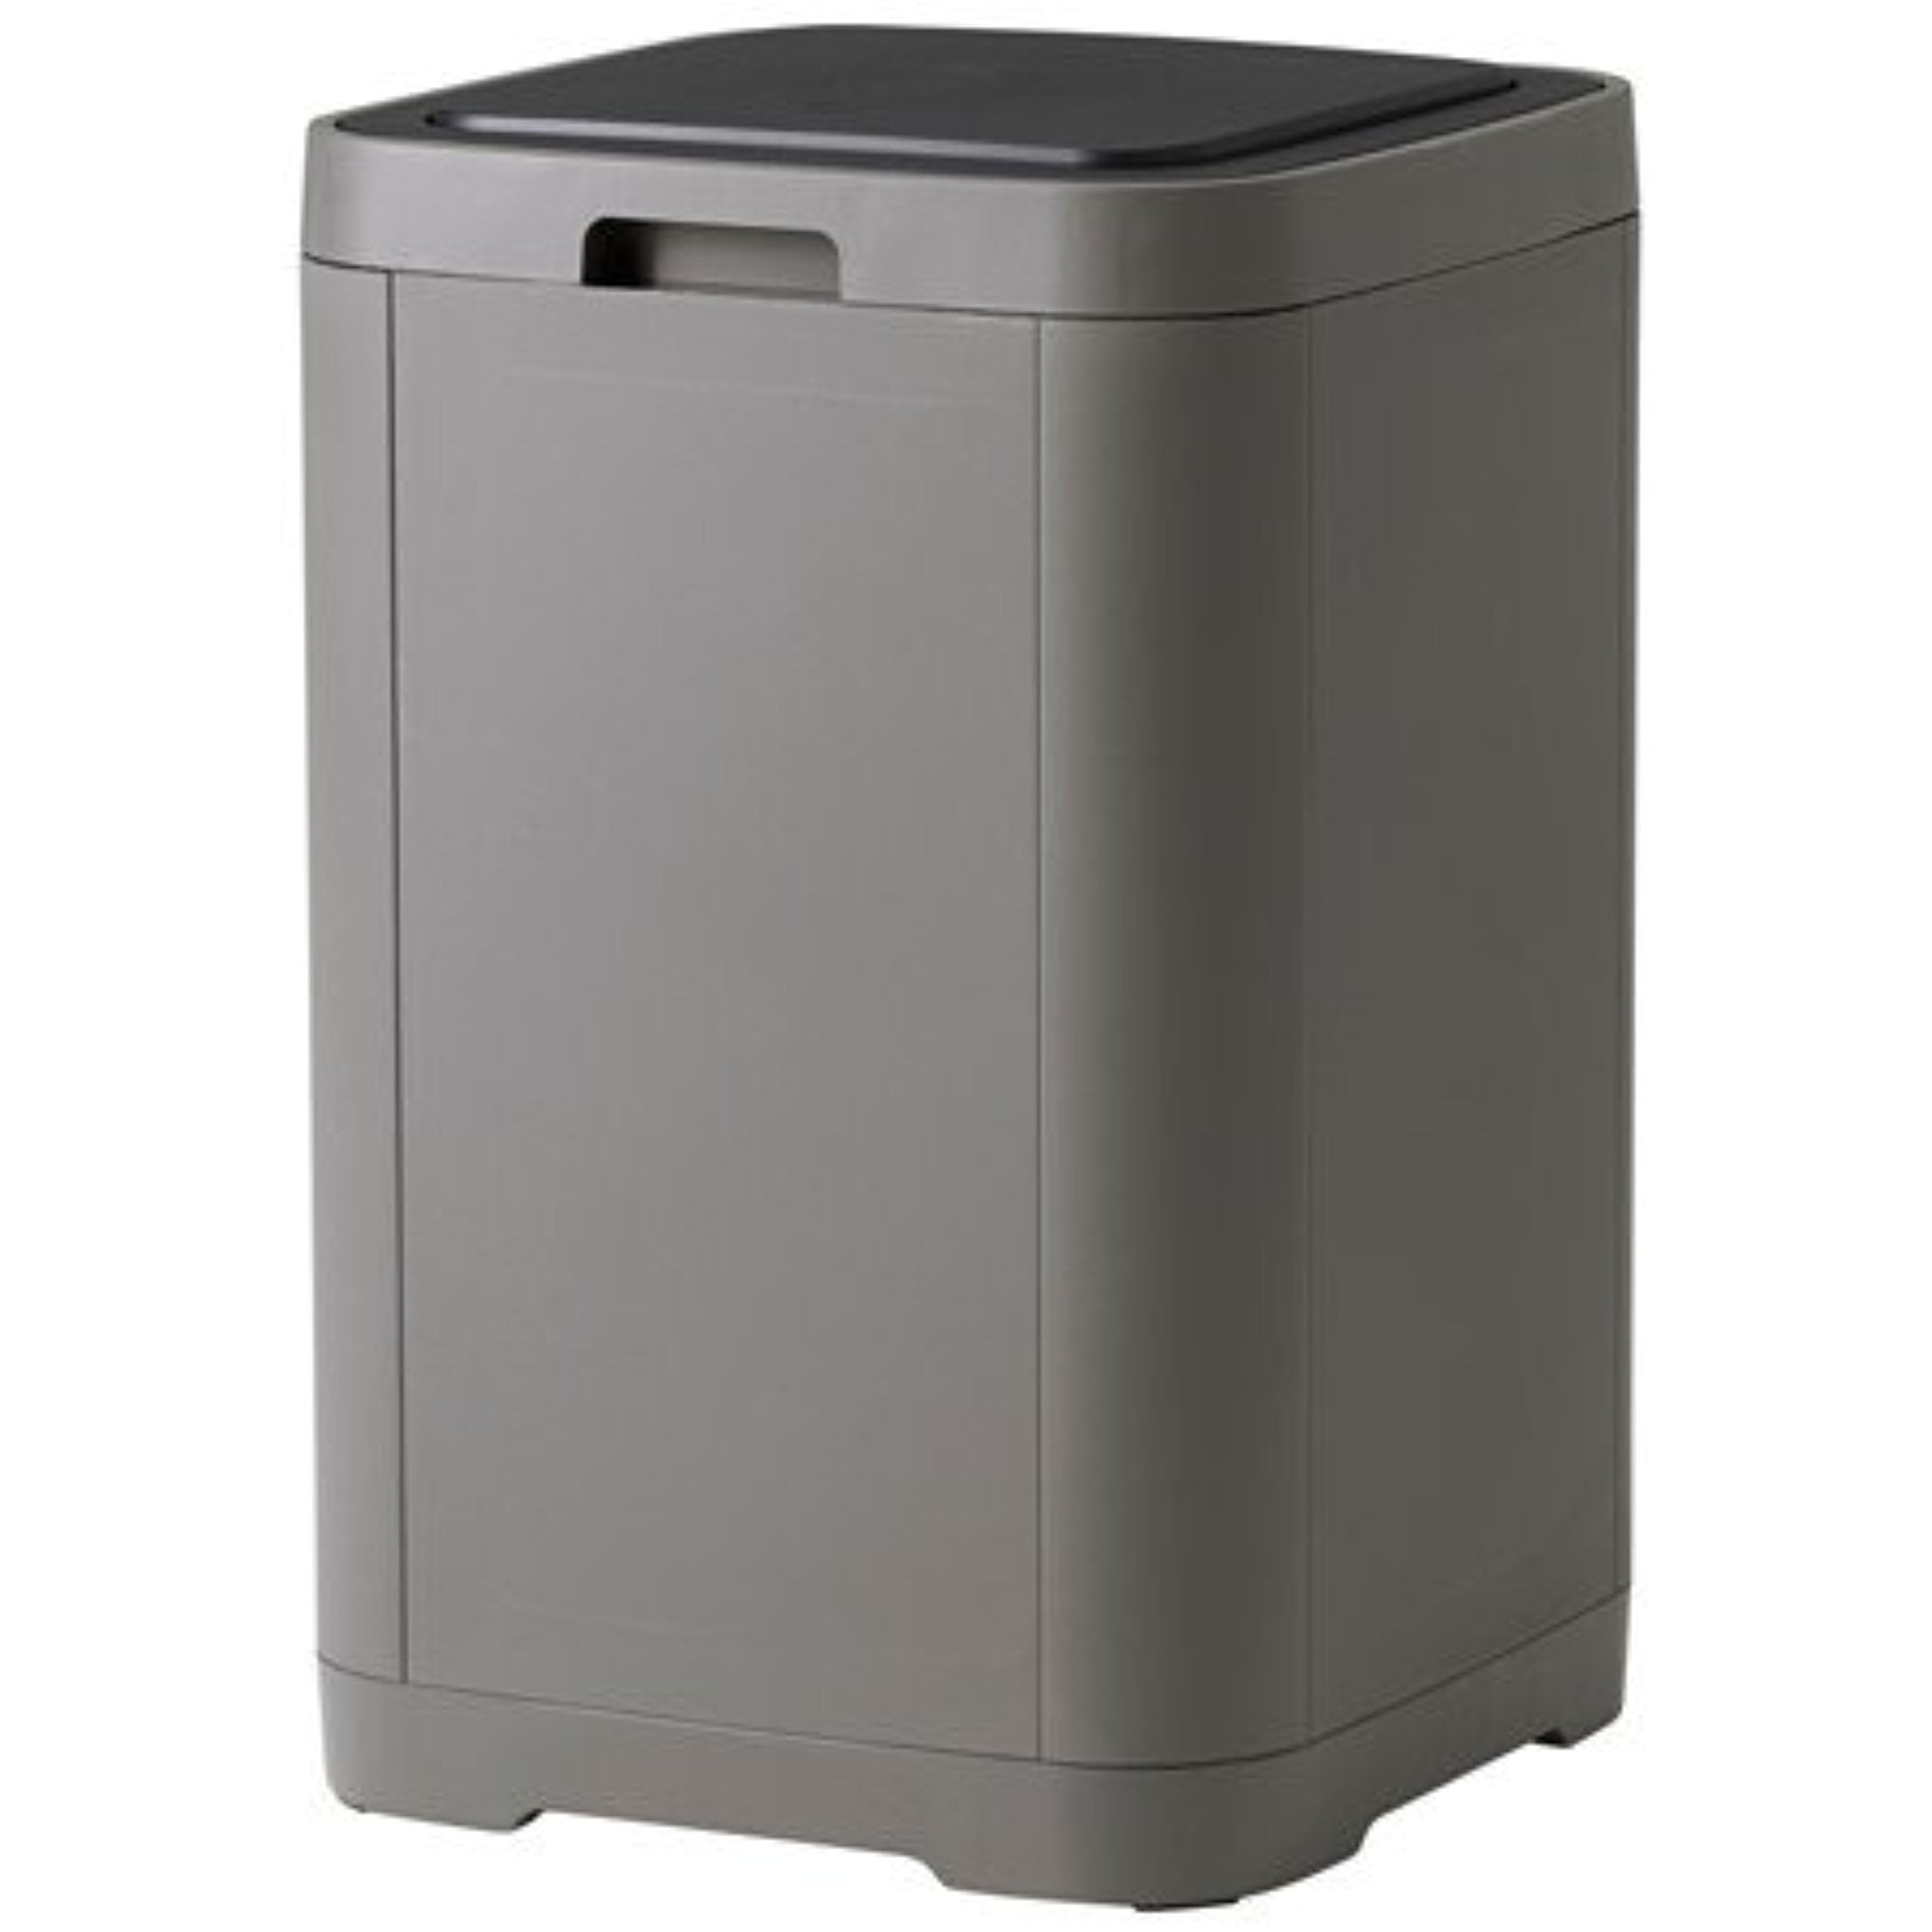 KNÖCKLA Step trash can, dark gray, 7 gallon - IKEA